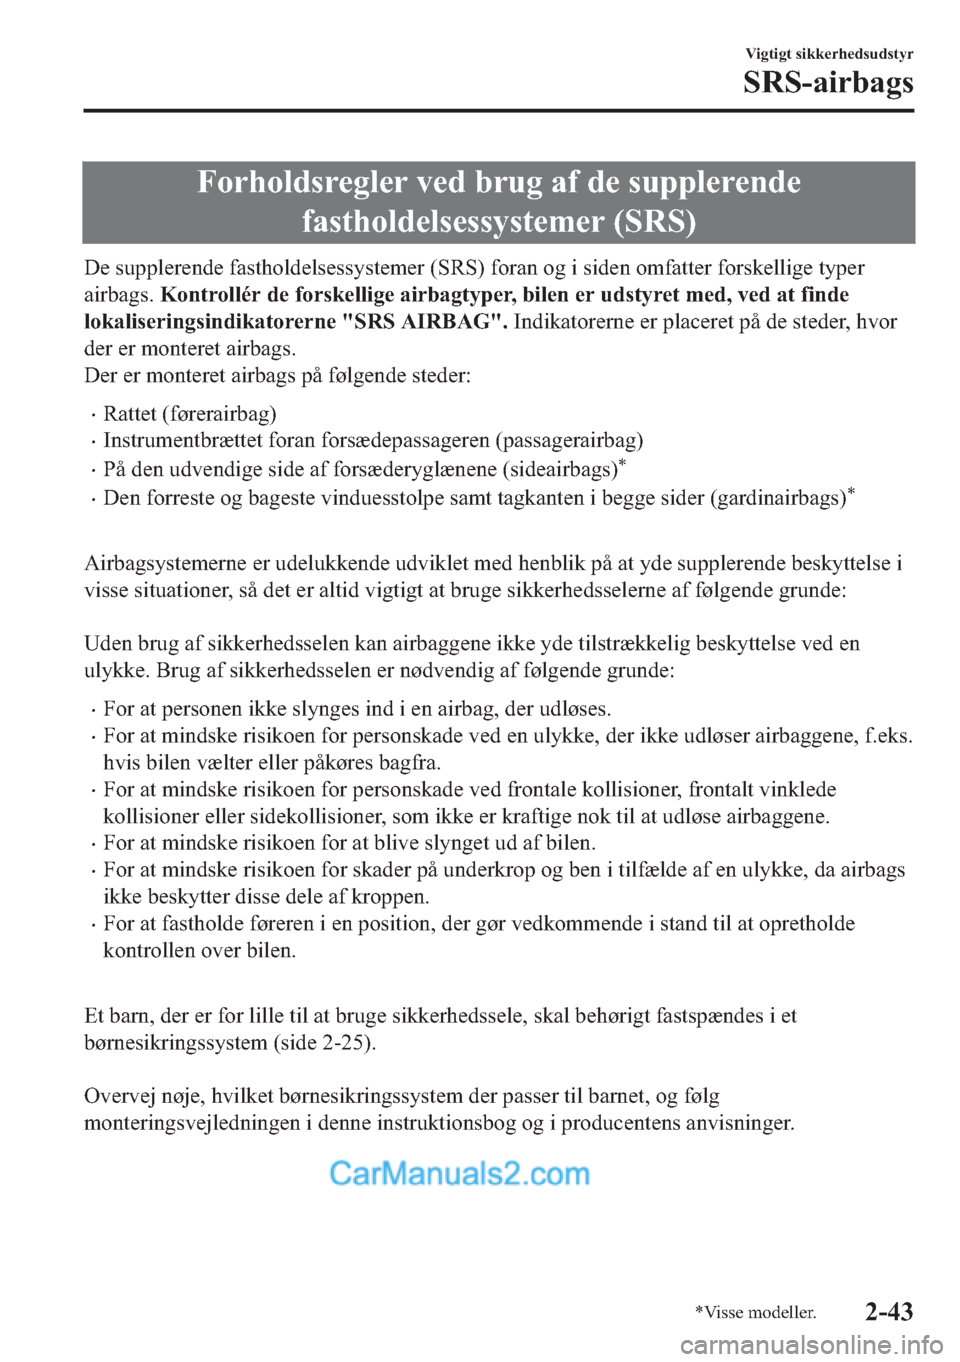 MAZDA MODEL 2 2019  Instruktionsbog (in Danish) �)�R�U�K�R�O�G�V�U�H�J�O�H�U��Y�H�G��E�U�X�J��D�I��G�H��V�X�S�S�O�H�U�H�Q�G�H
�I�D�V�W�K�R�O�G�H�O�V�H�V�V�\�V�W�H�P�H�U���6�5�6�
��H��V�X�S�S�O�H�U�H�Q�G�H��I�D�V�W�K�R�O�G�H�O�V�H�V�V�\�V